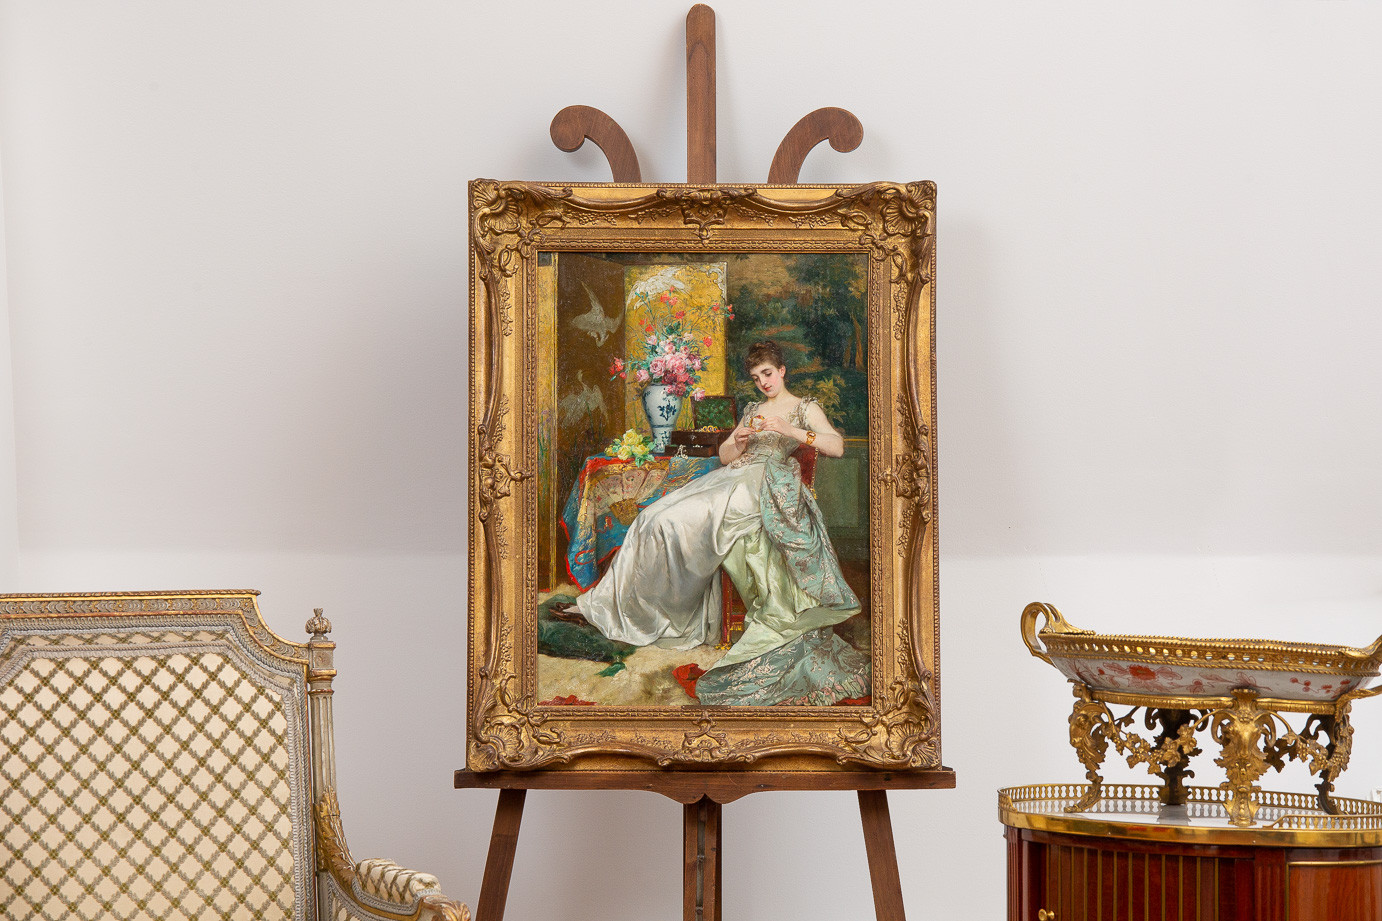 Frans Verhas (1827-1897)  - The favorite jewel, oil on panel, circa 1850-1894